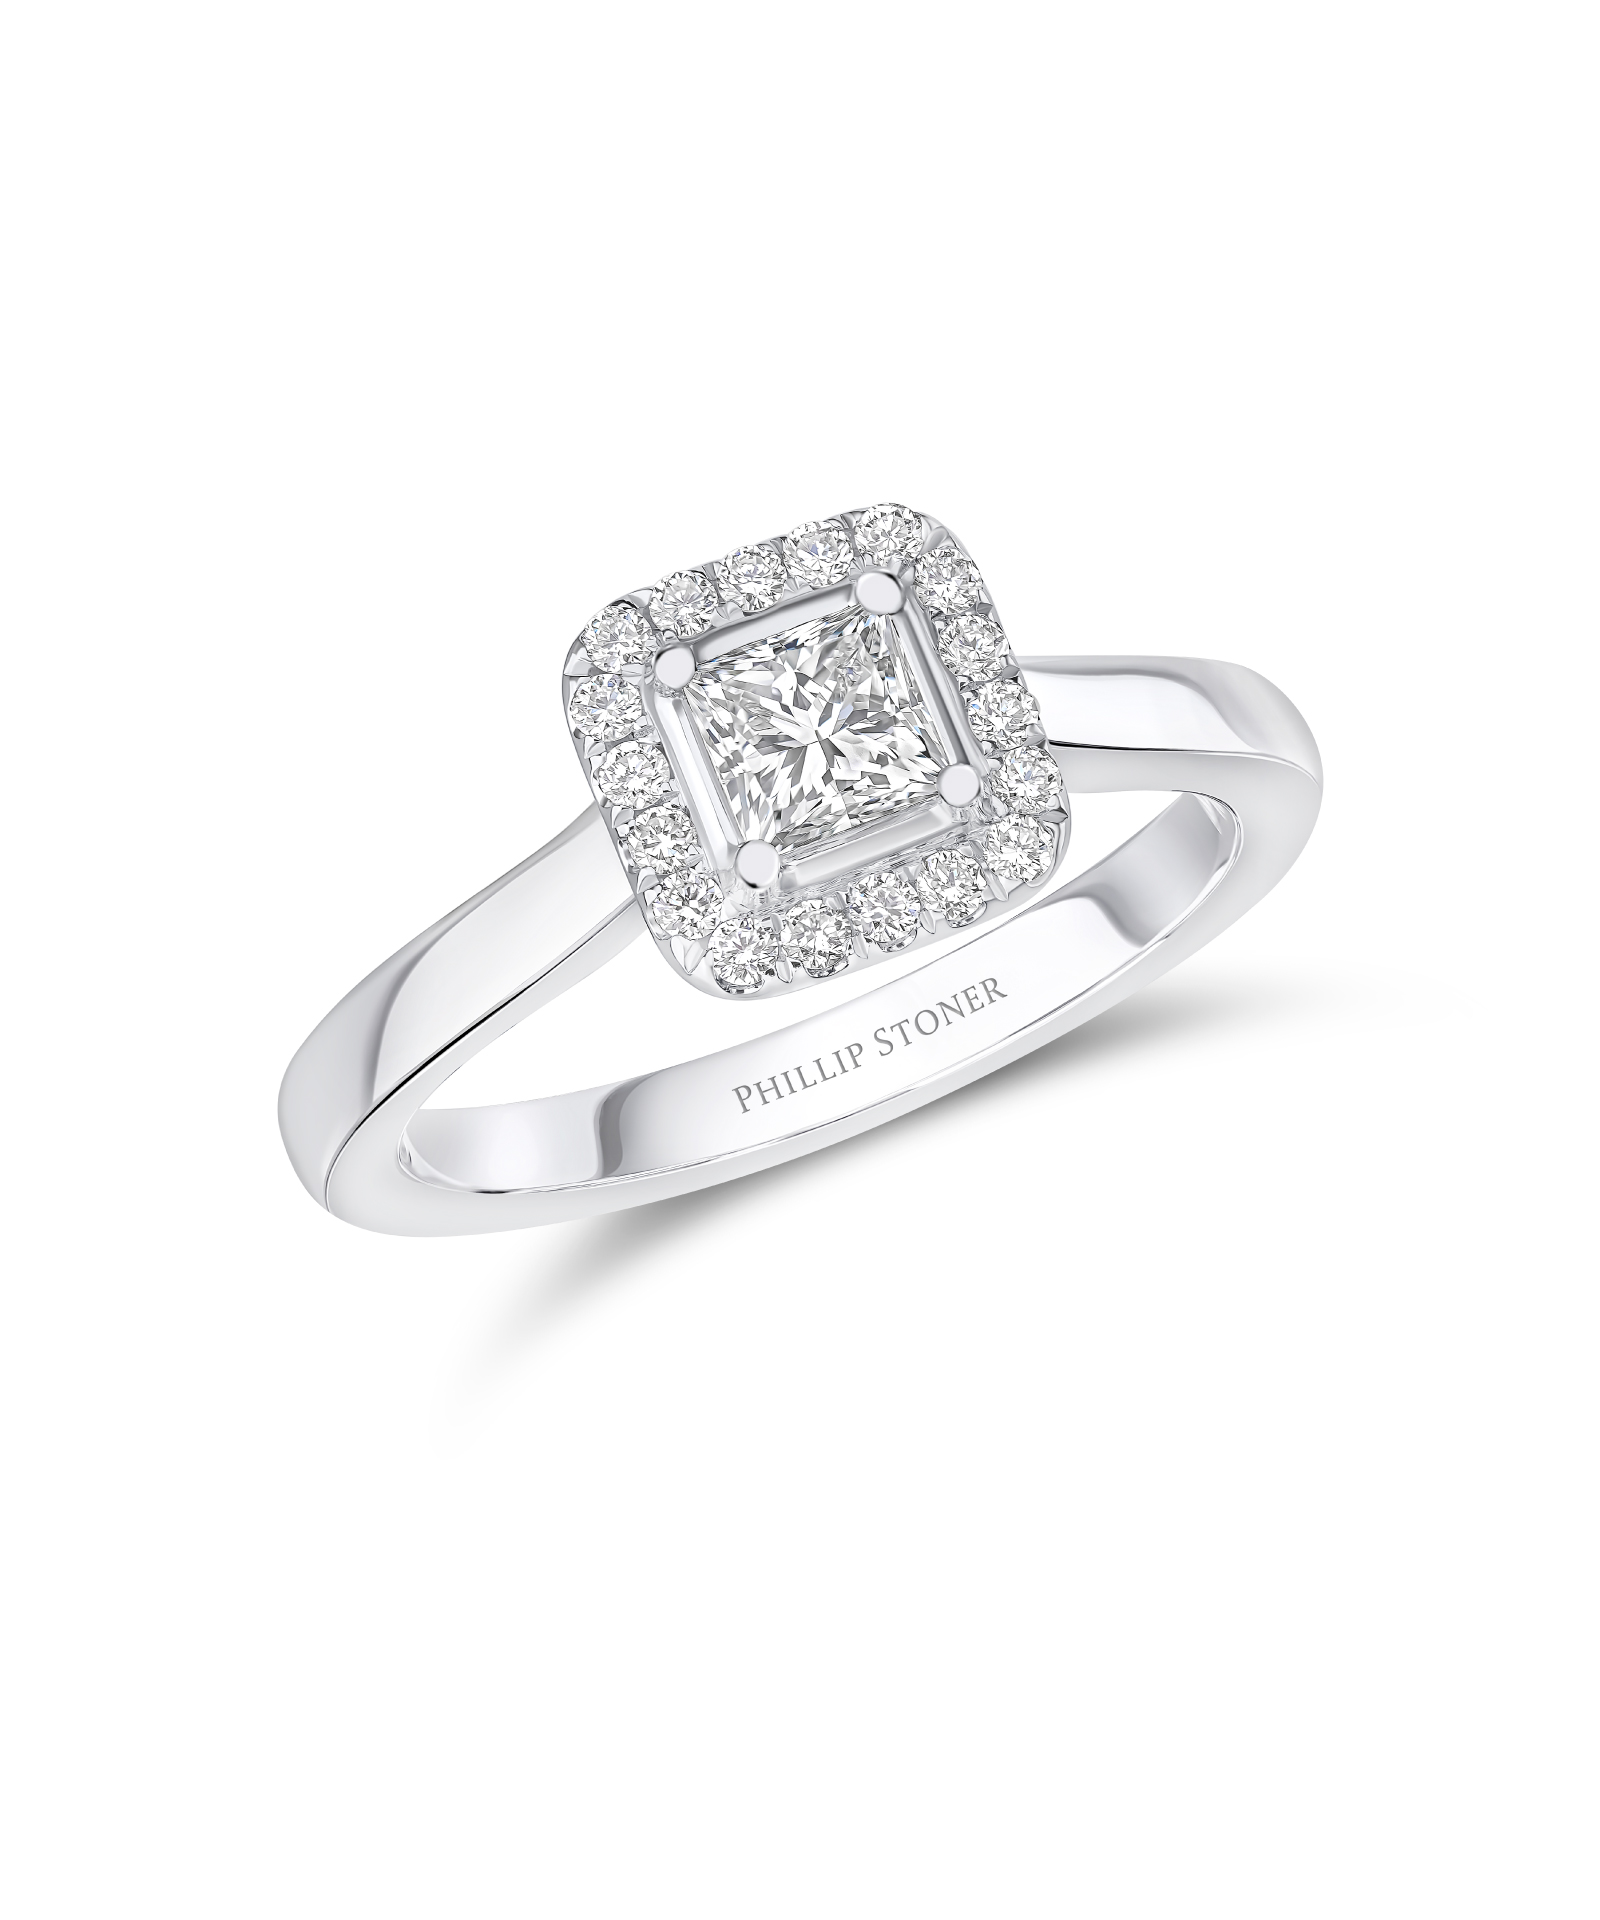 0.40ct Princess Cut Diamond Halo Engagement Ring with Plain Shoulders - Phillip Stoner The Jeweller